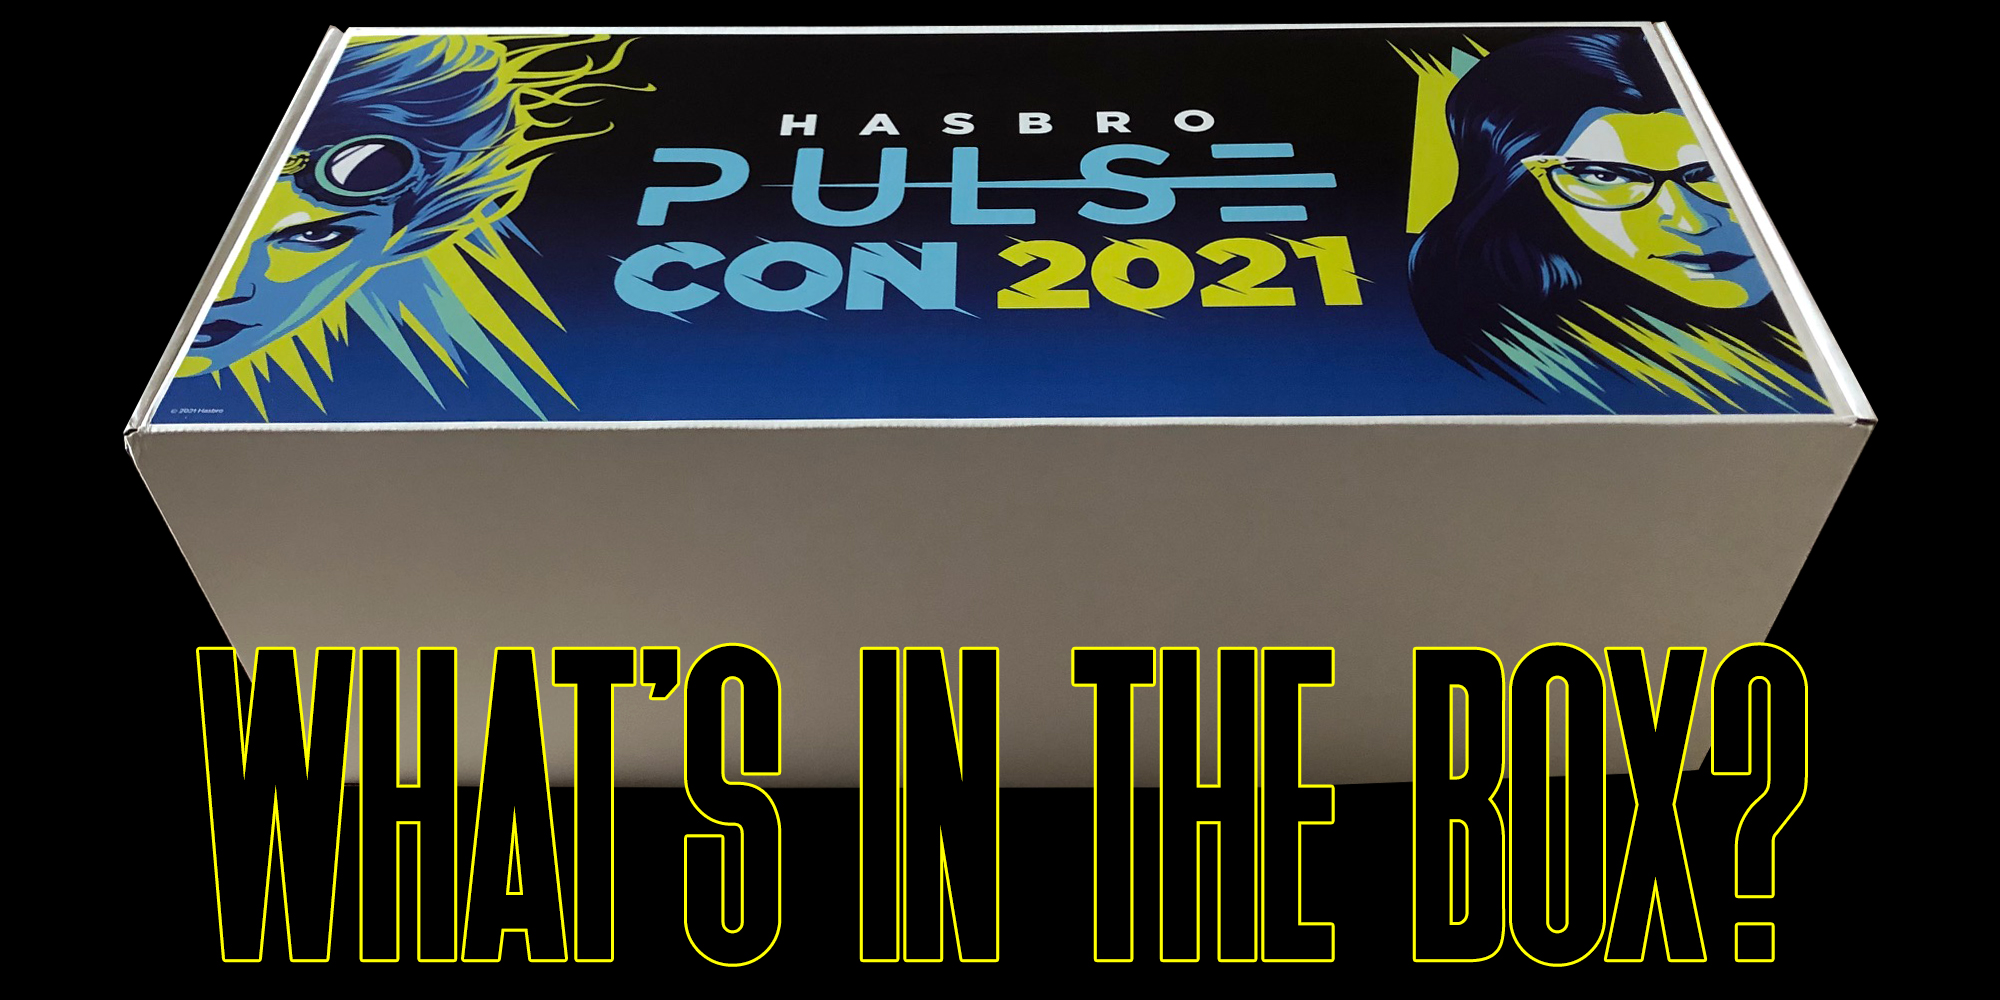 A Look At The Hasbro Pulse Con 2021 Promo Box